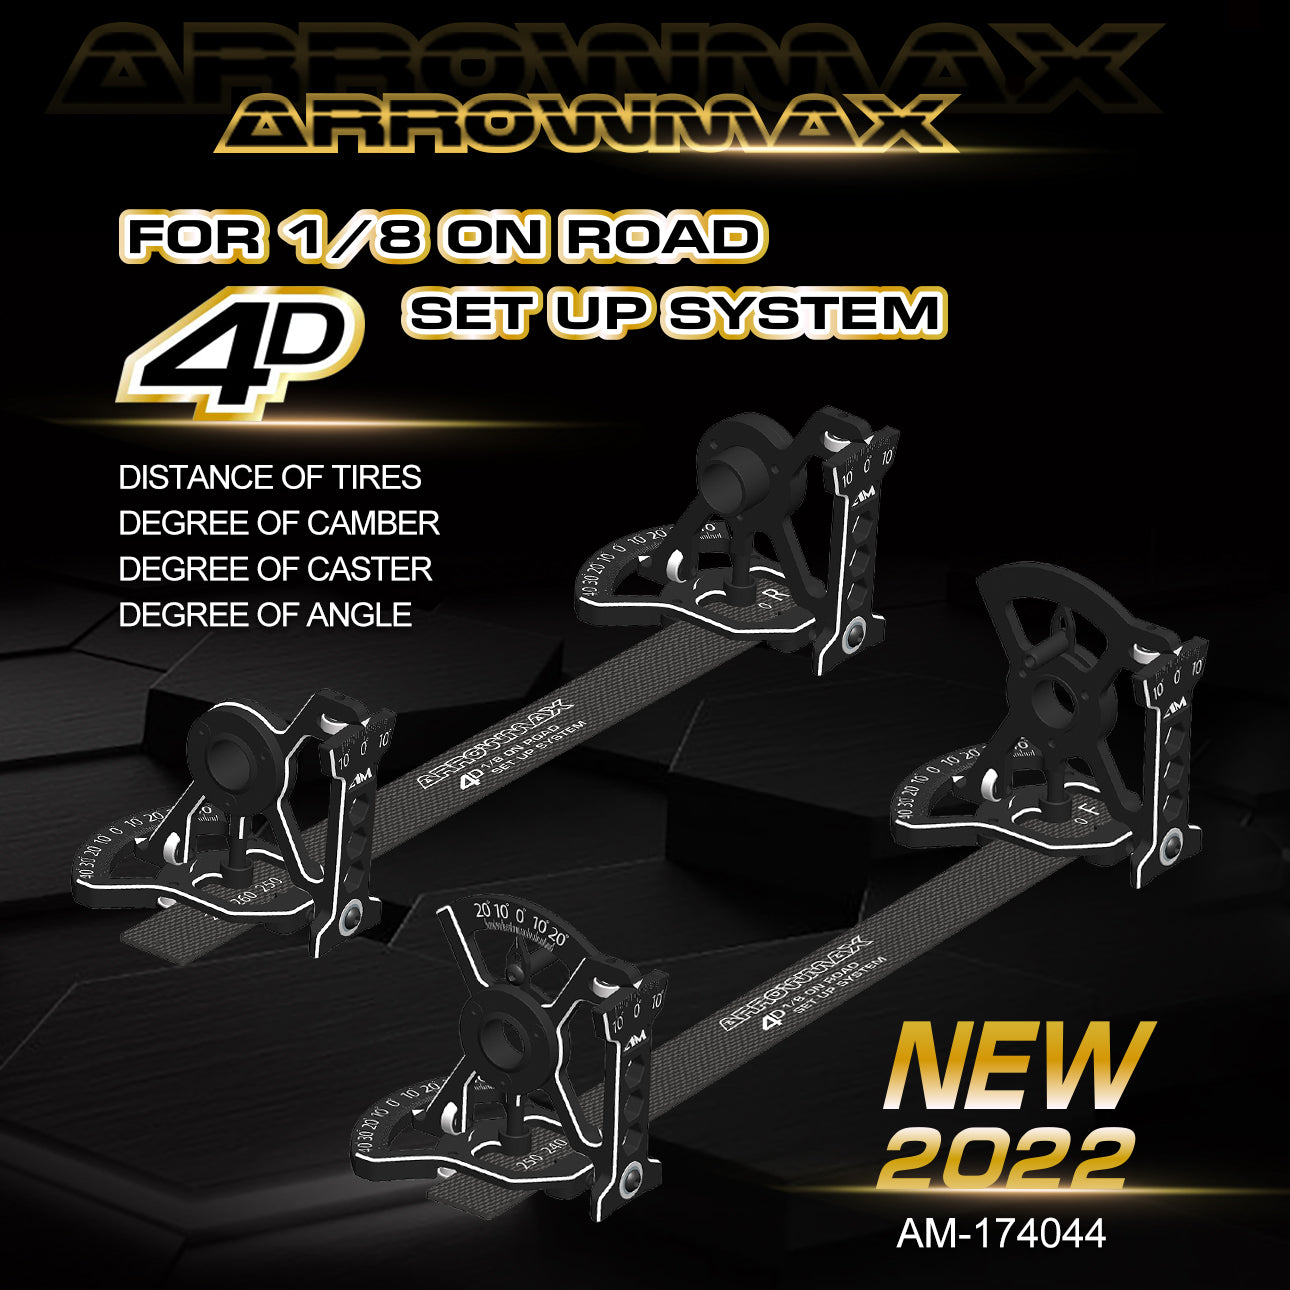 Arrowmax 4D Set-up system for 1/8 onroad (AM-174044)